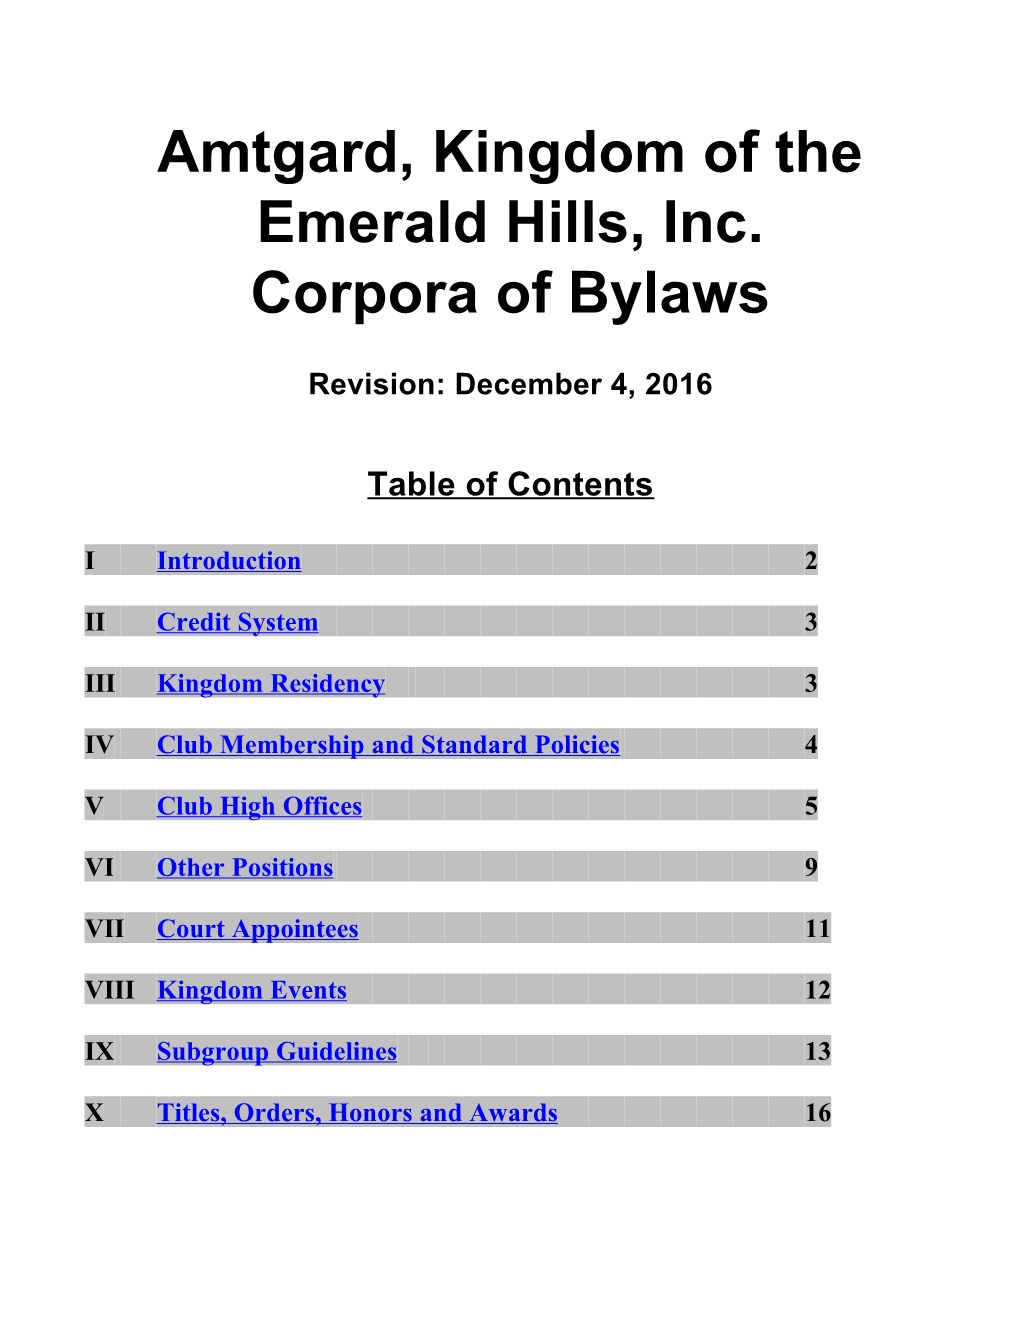 Emerald Hills Corpora